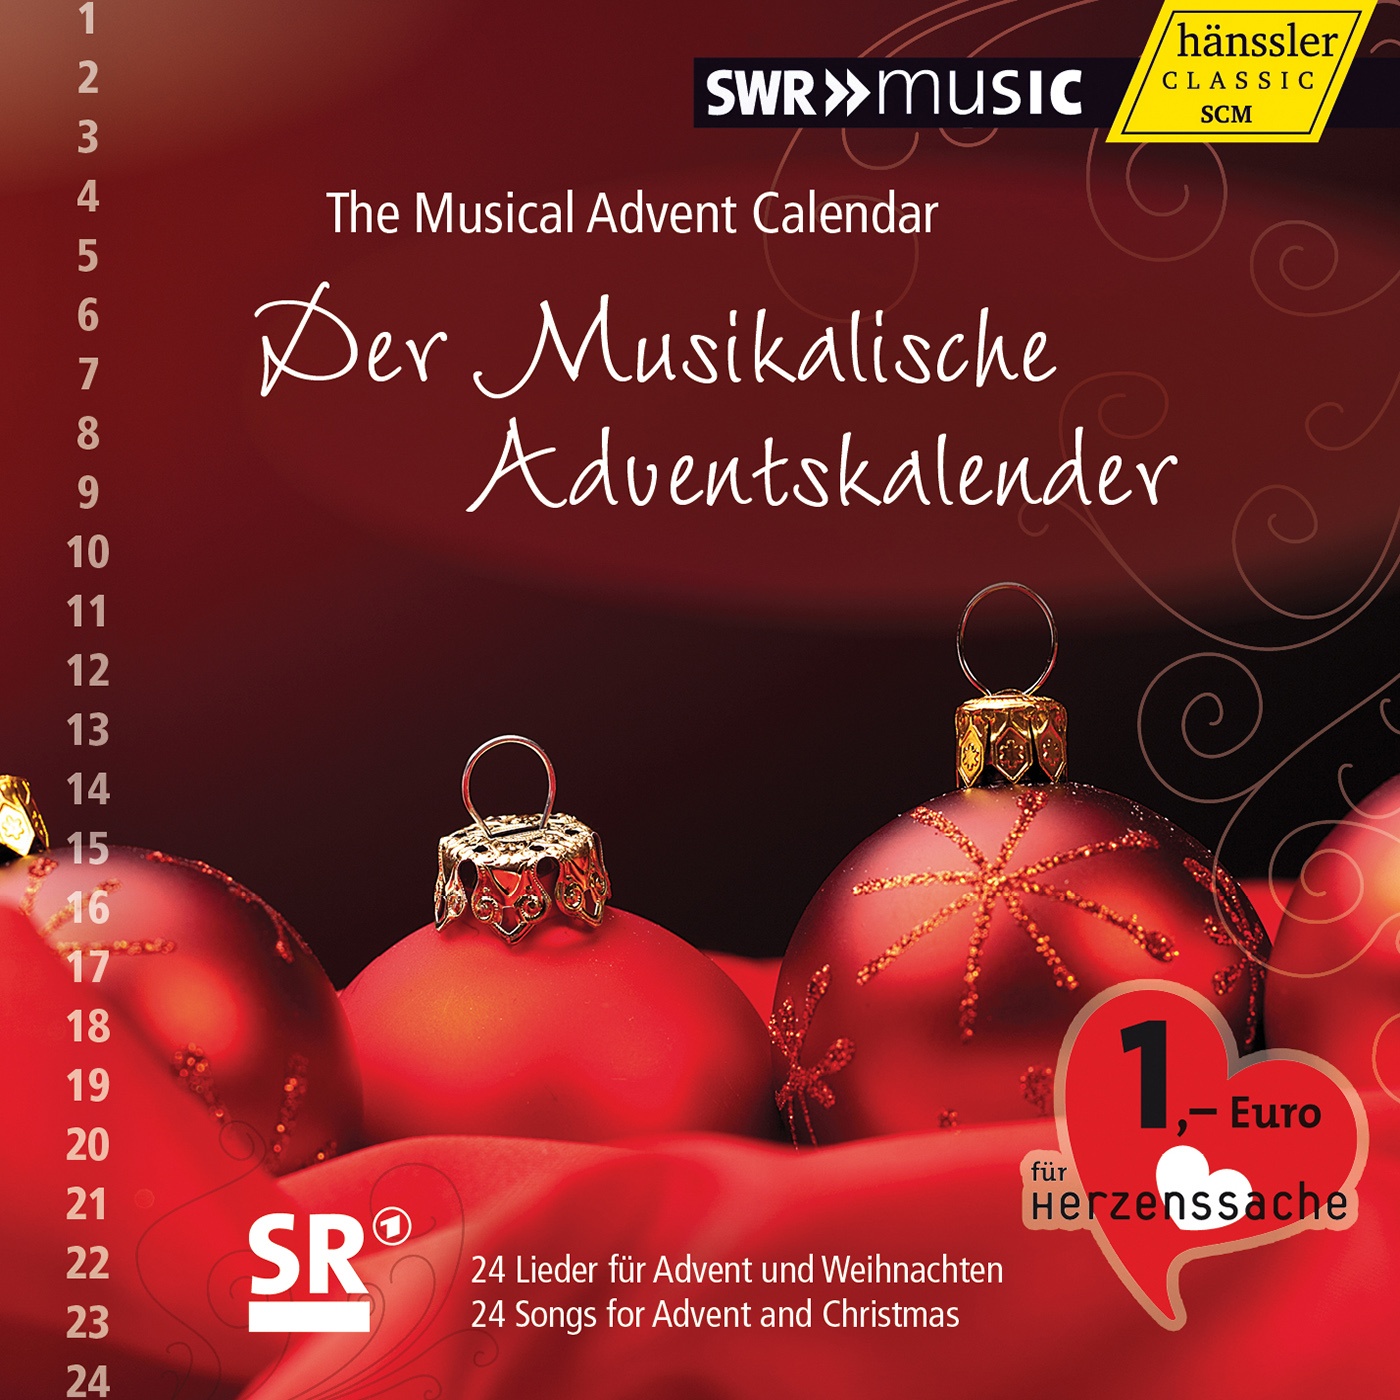 CHRISTMAS - The Musical Advent Calendar 2013